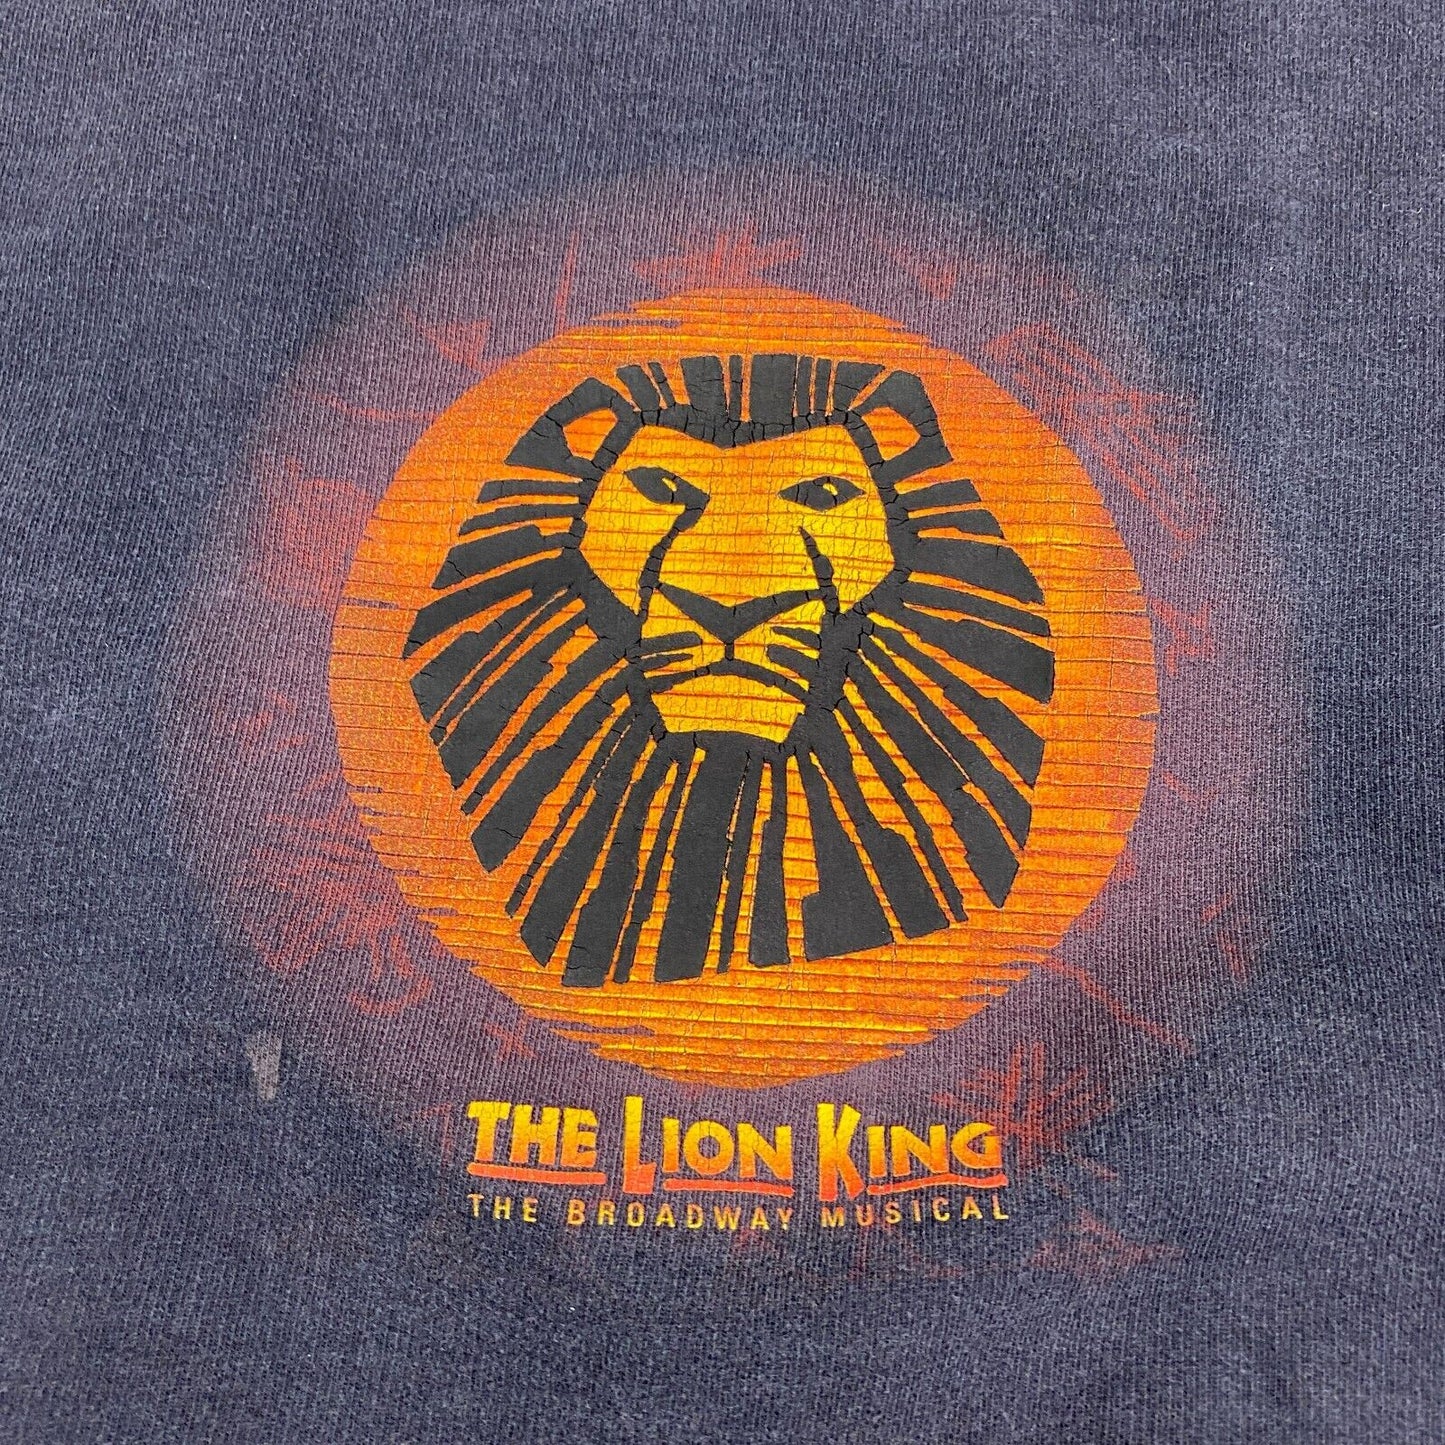 VINTAGE 90s The Lion King Broadway Musical Crewneck Sweater sz Large Men Adult